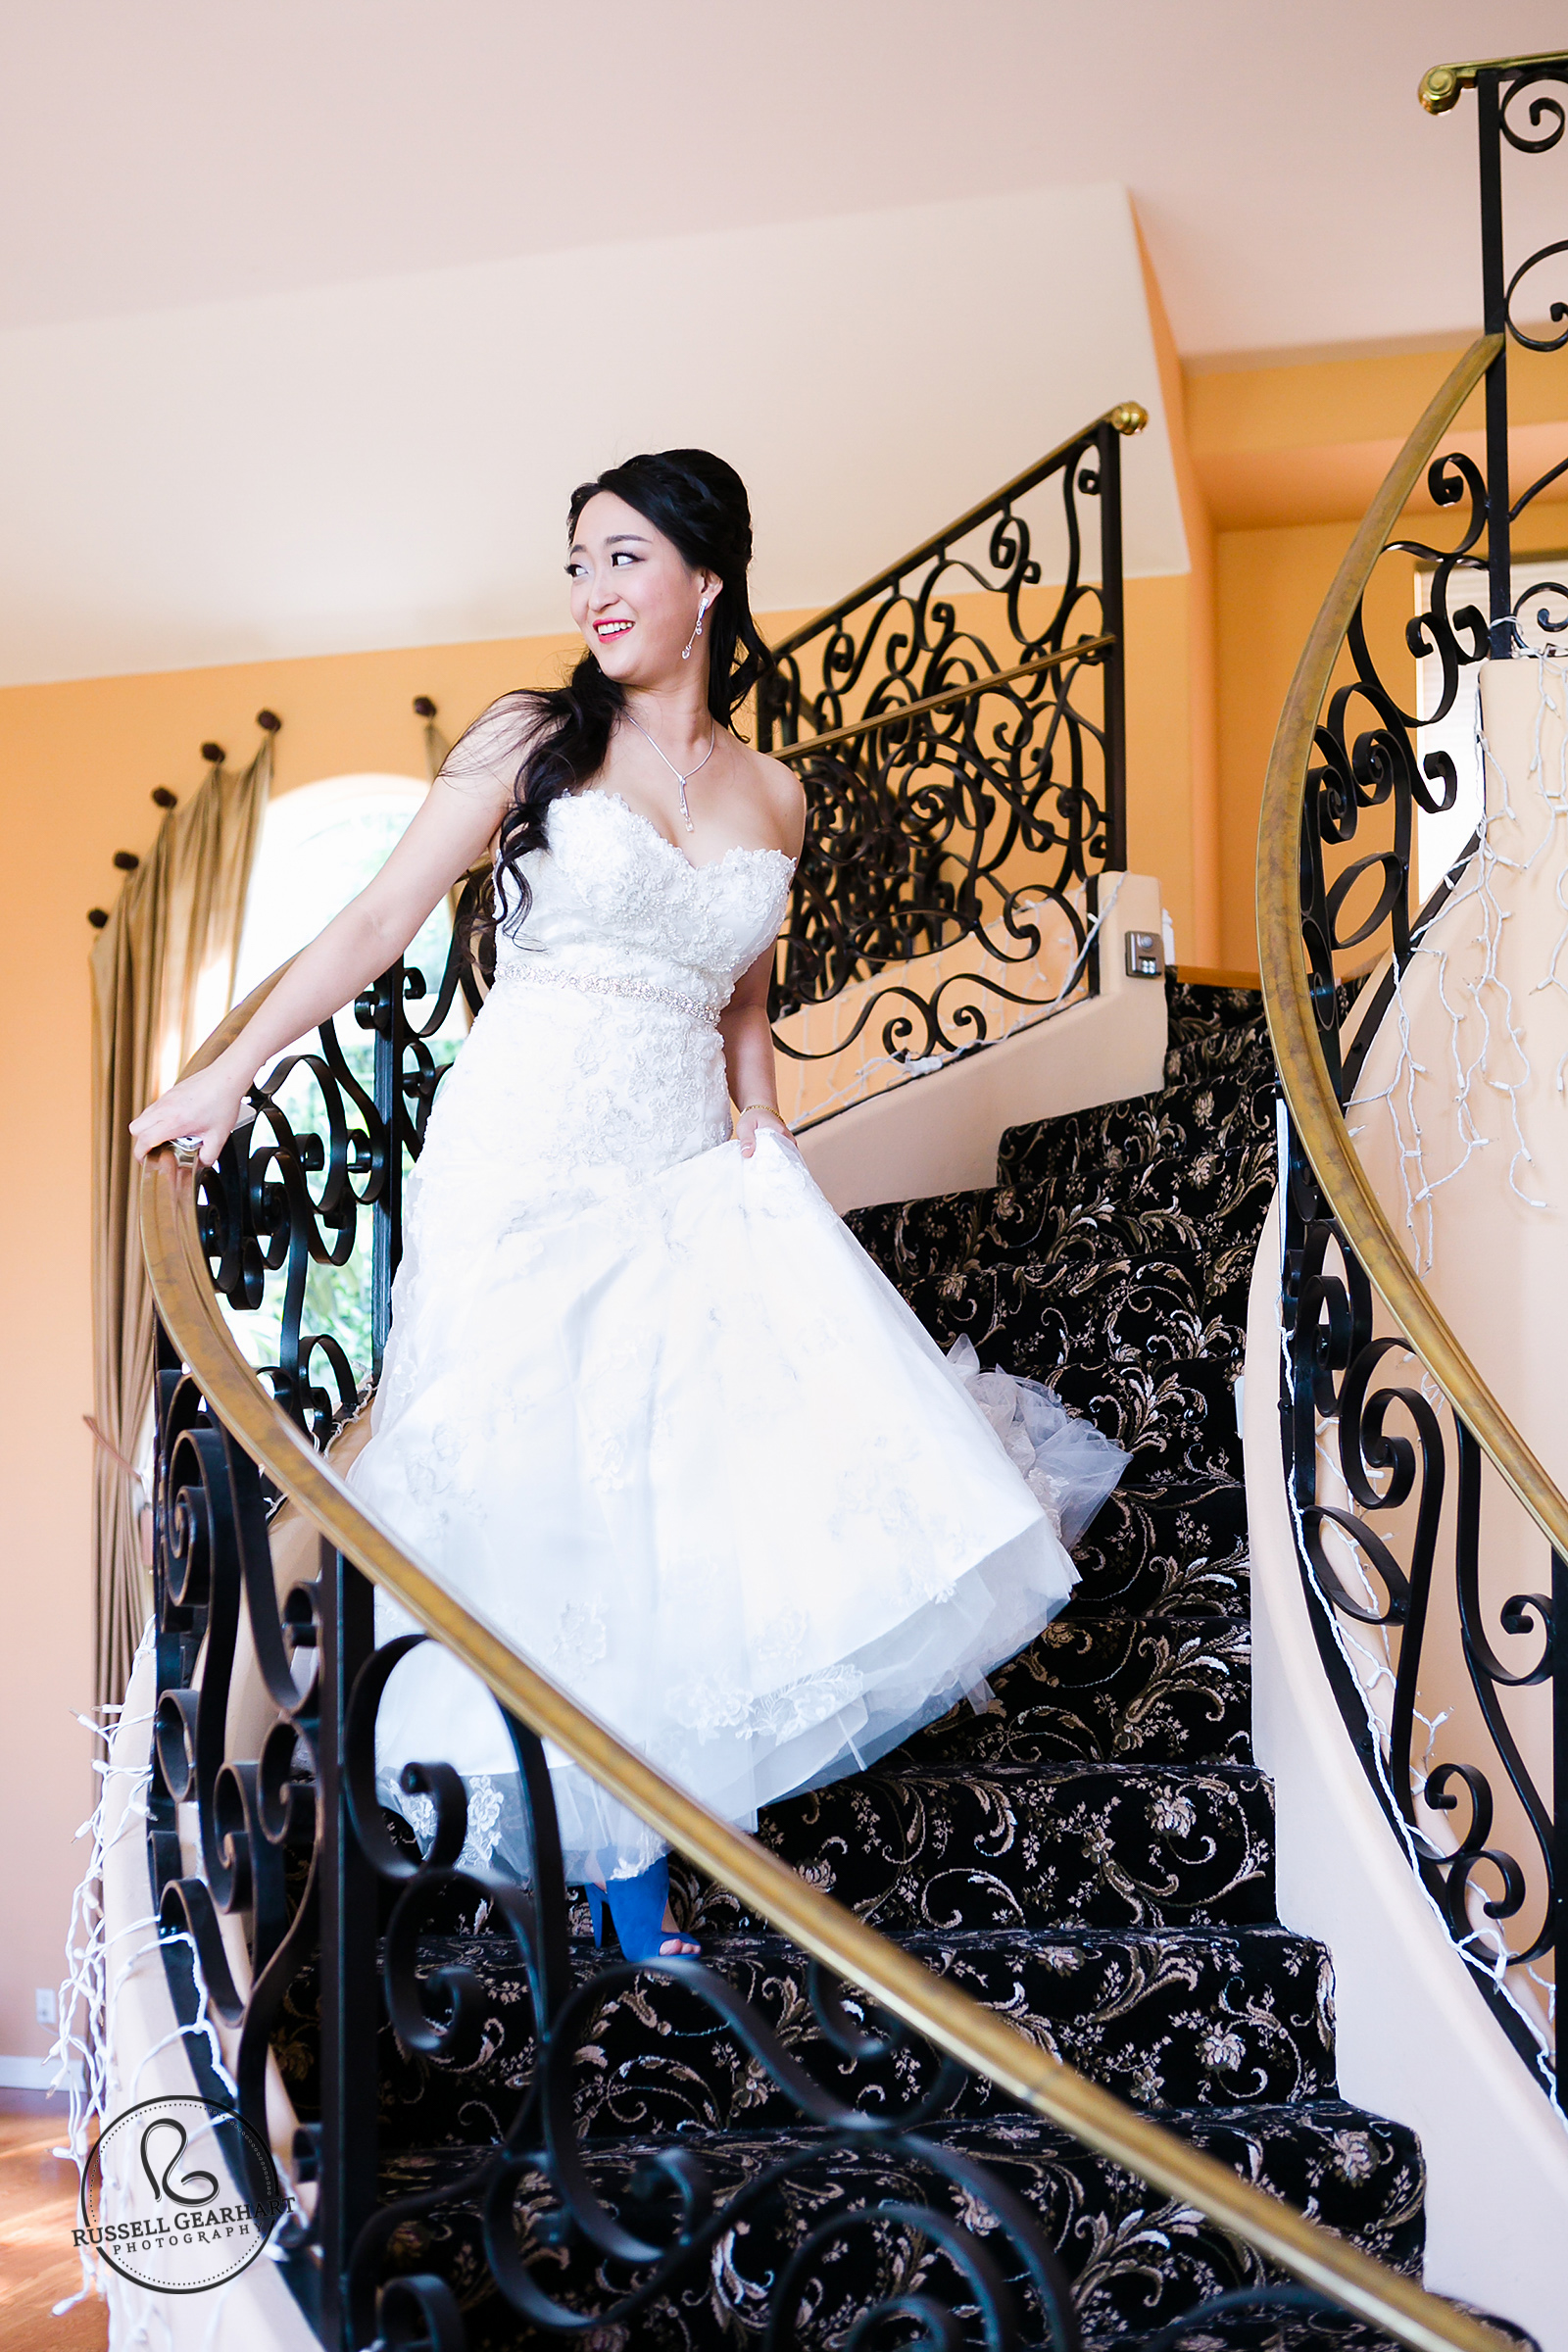 Stunning bride descends staircase in La Canada home – La Canada Flintridge Wedding – Russell Gearhart Photography – www.gearhartphoto.com